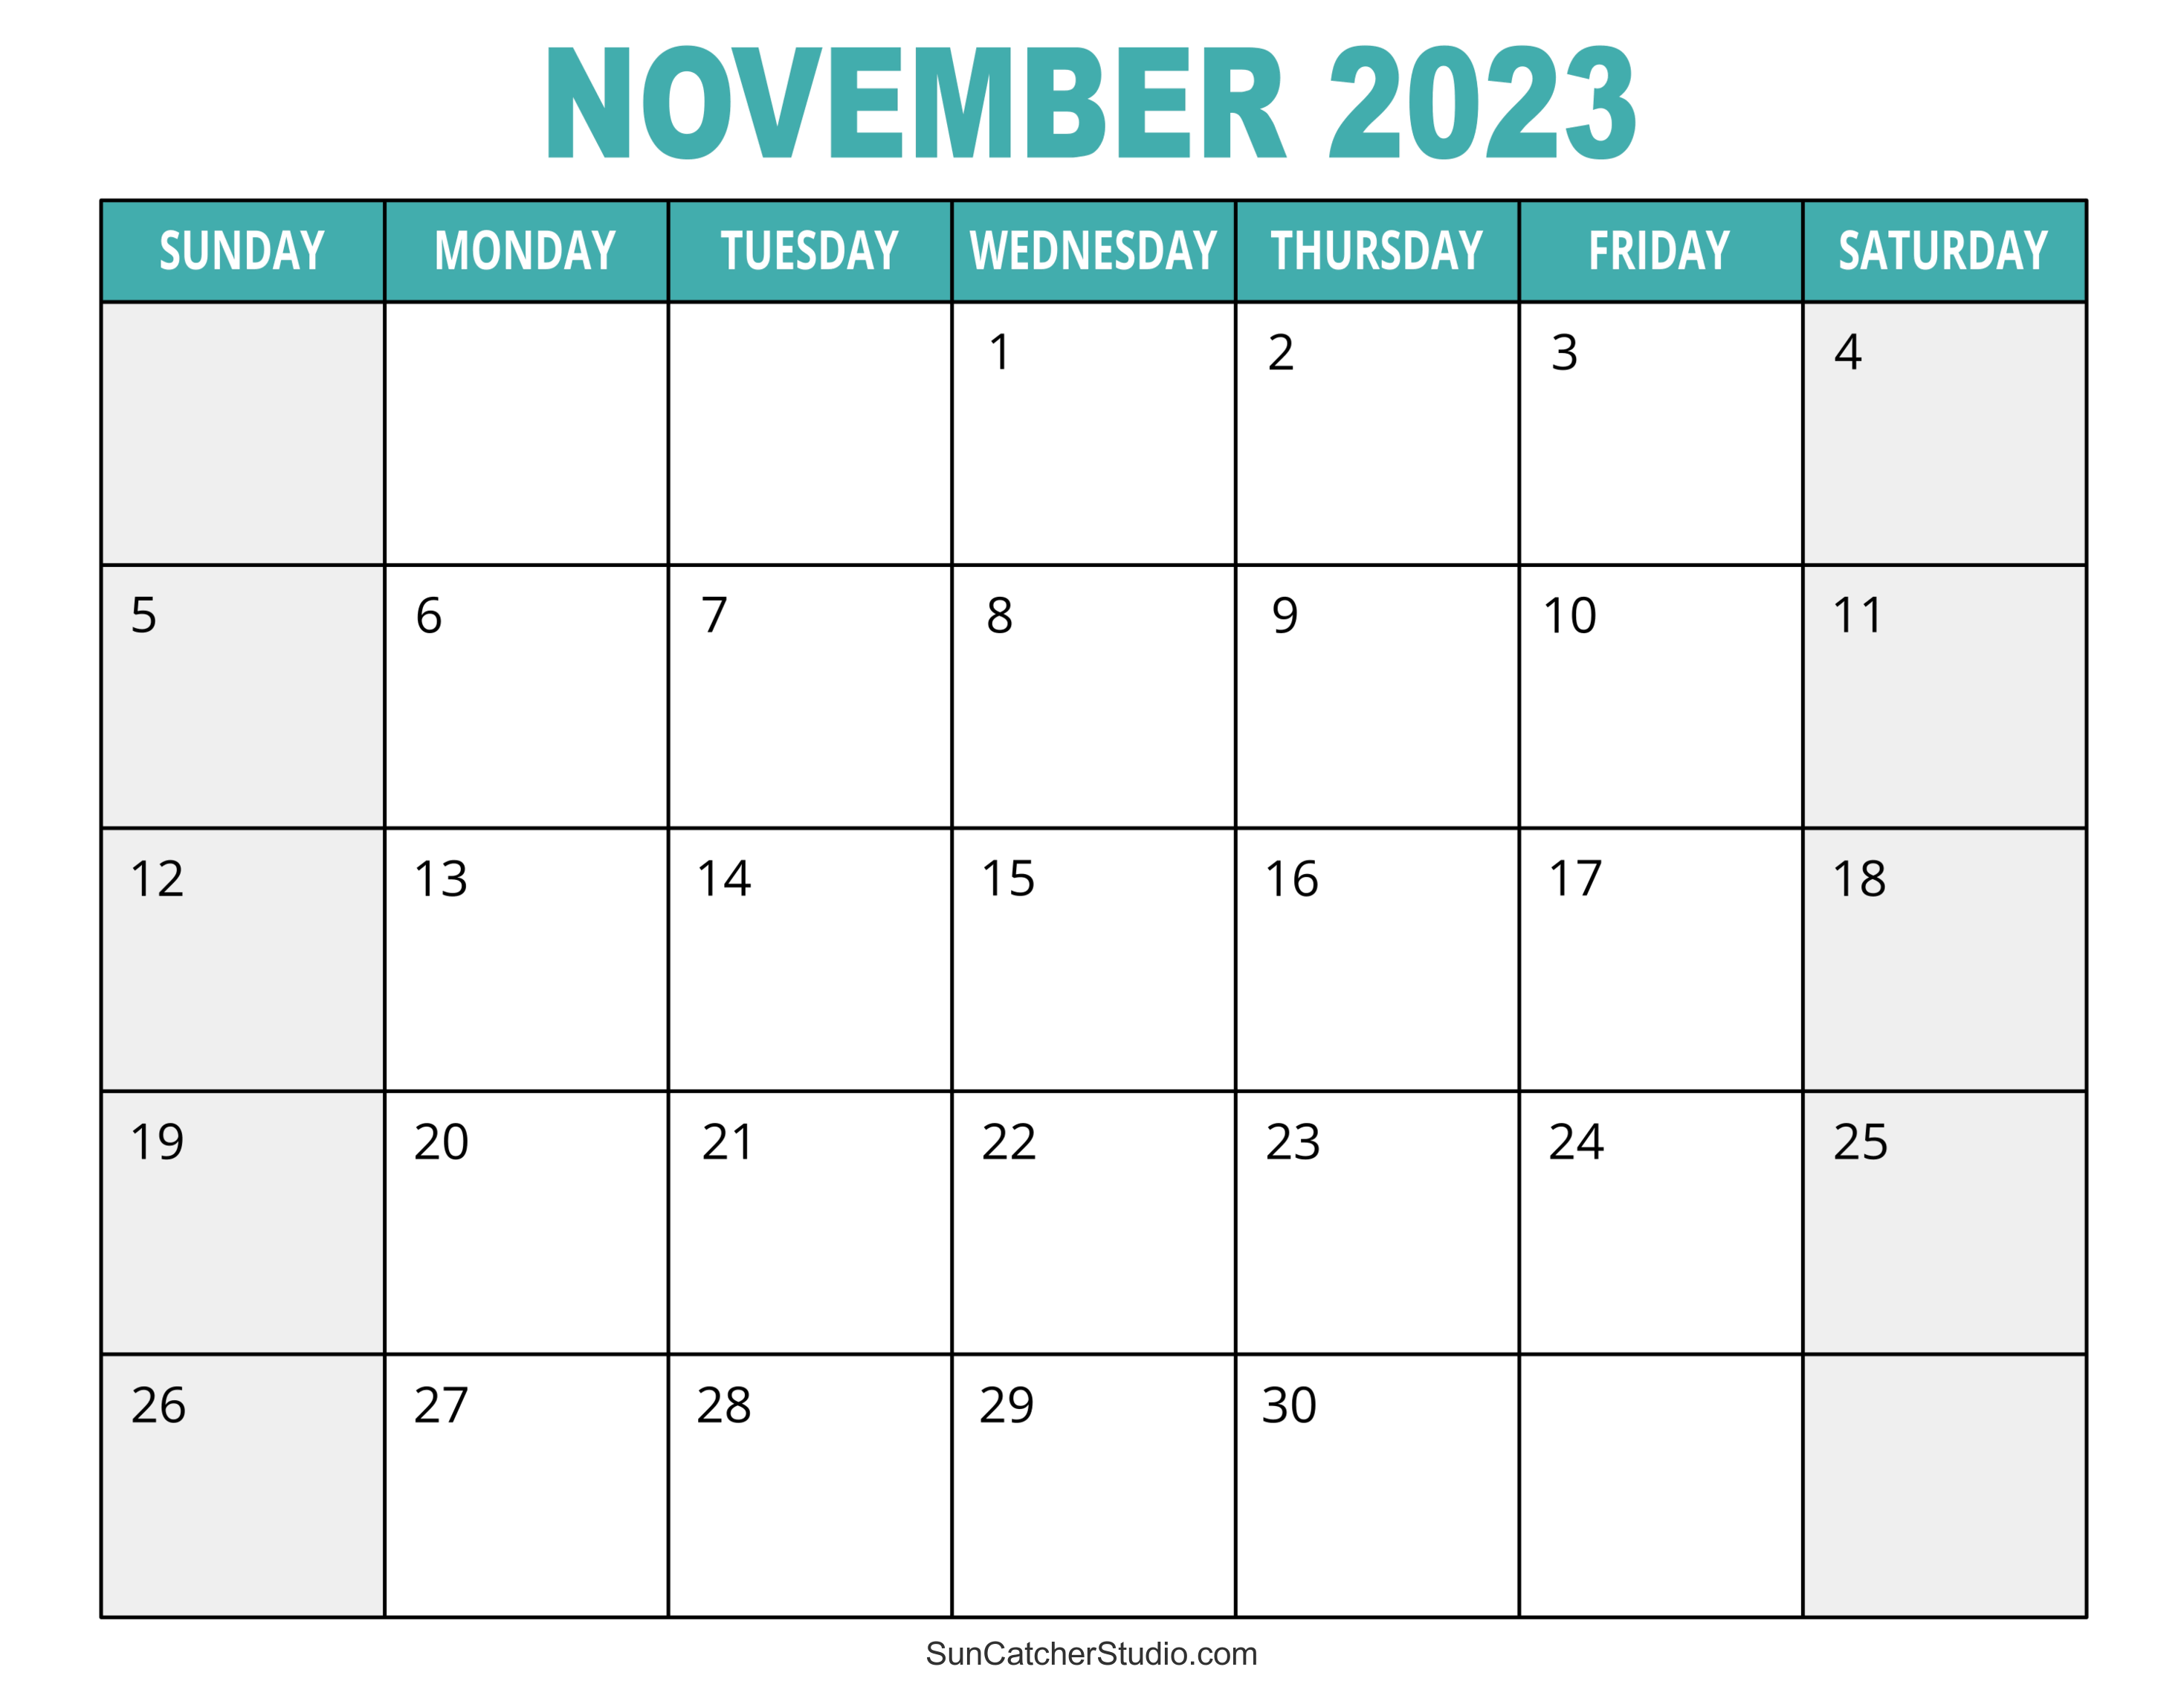 November 2023 Calendar Free Printable Diy Projects Patterns